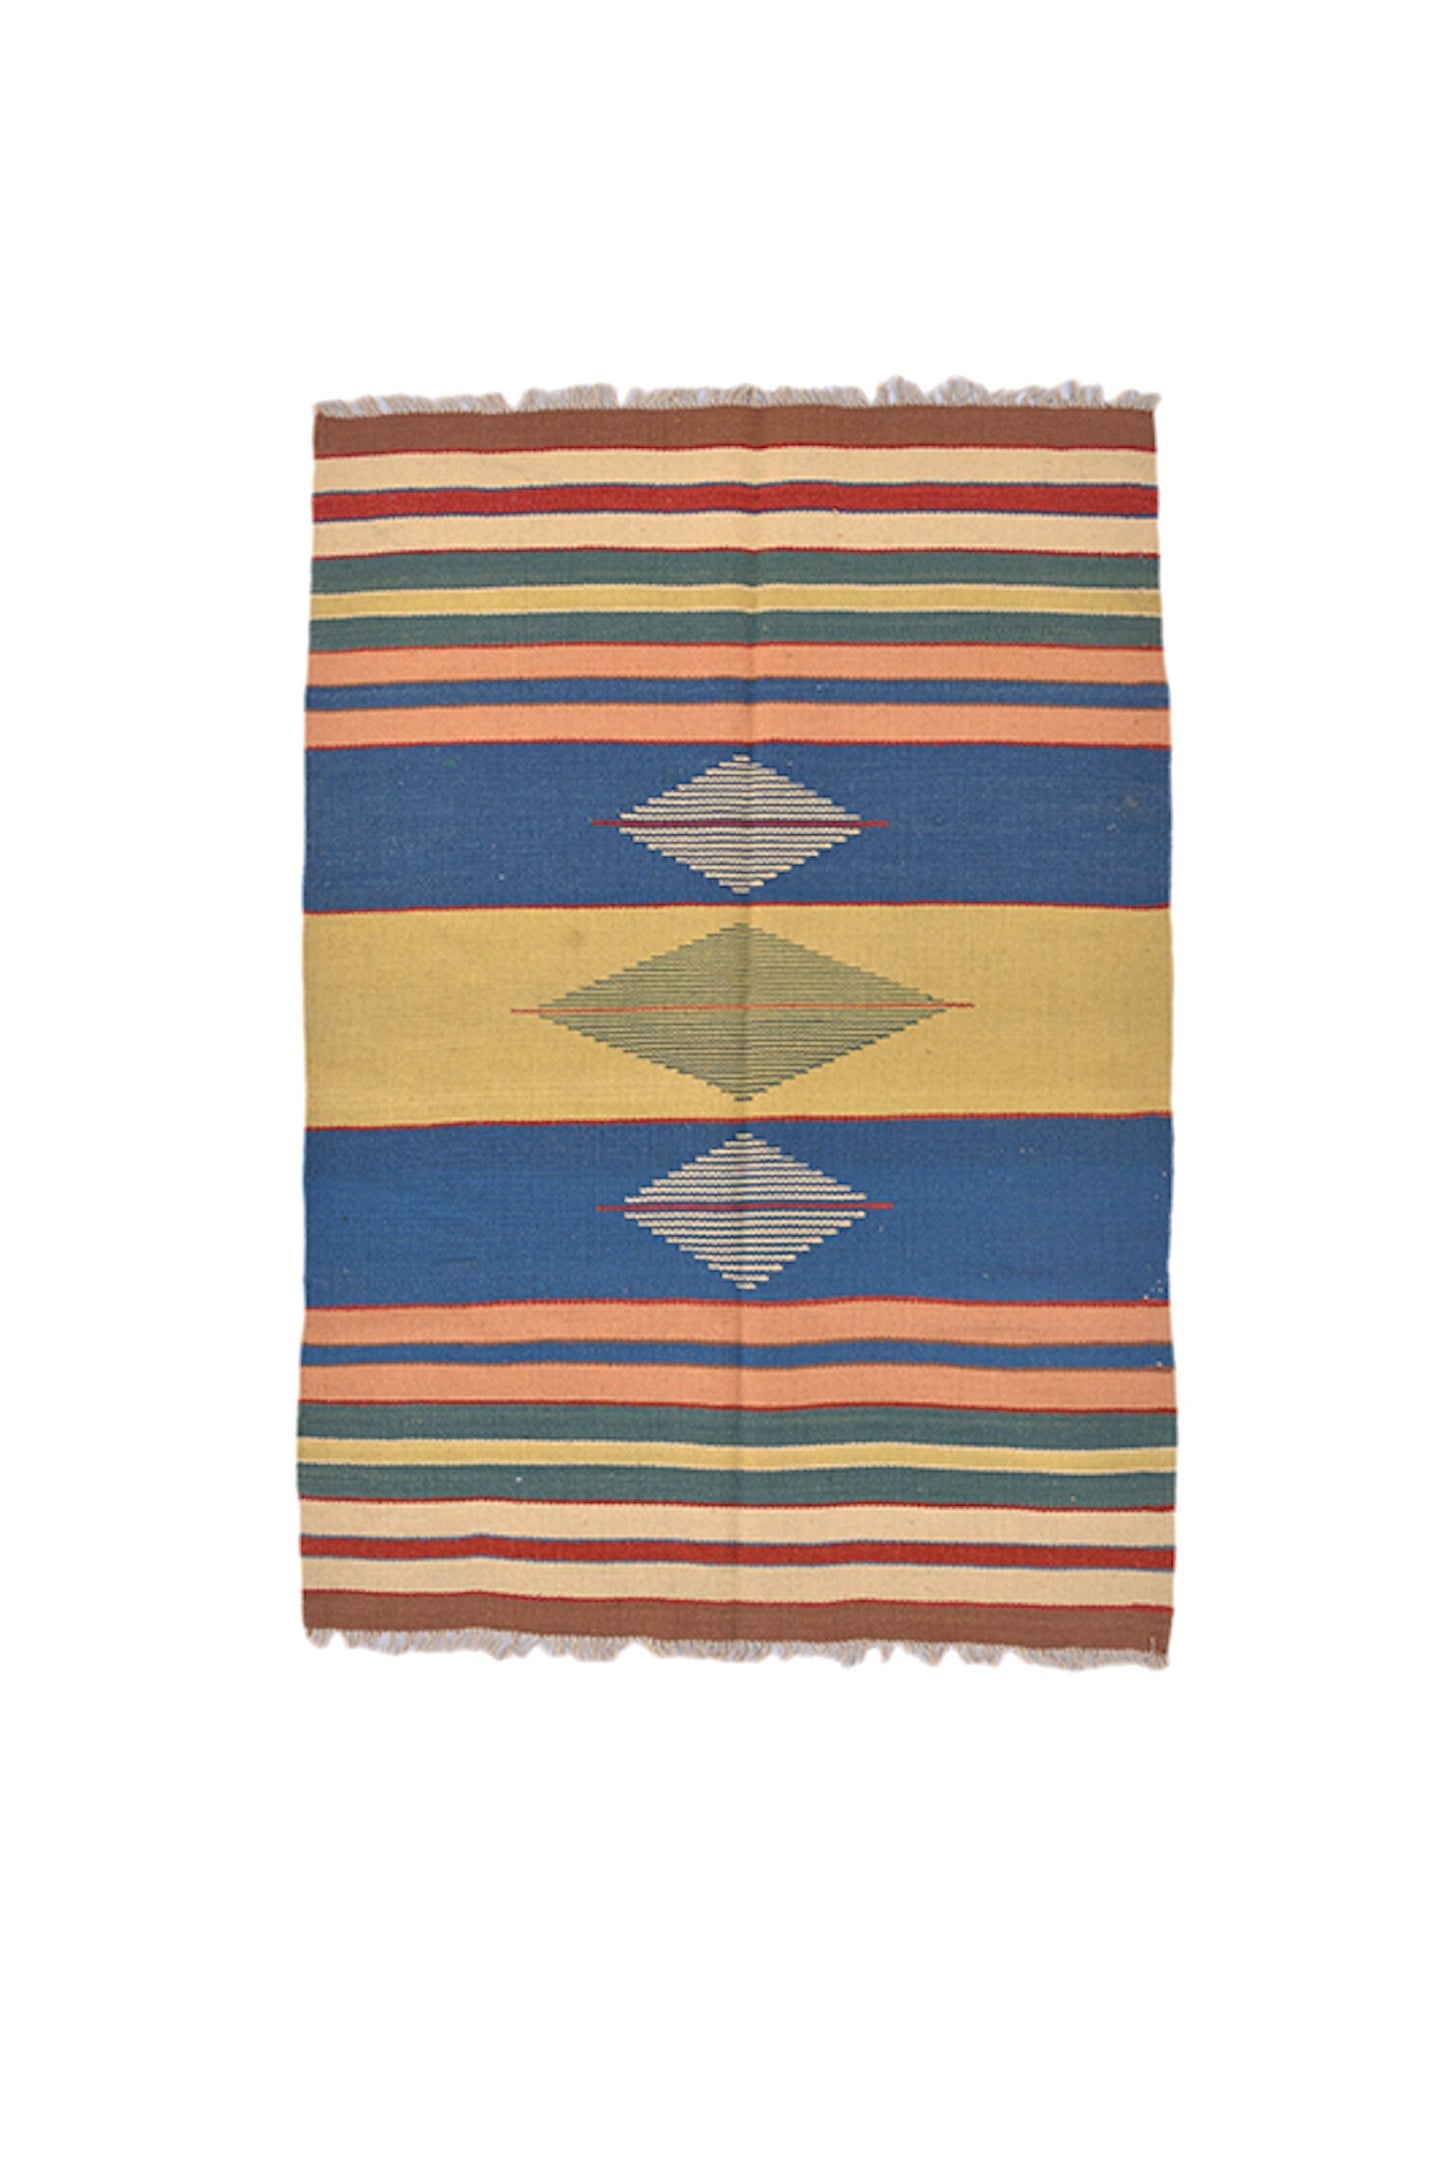 Turkish Kilim Rug | Multi Color Striped Handmade Rug | Tribal Boho Southwestern Wool Rug